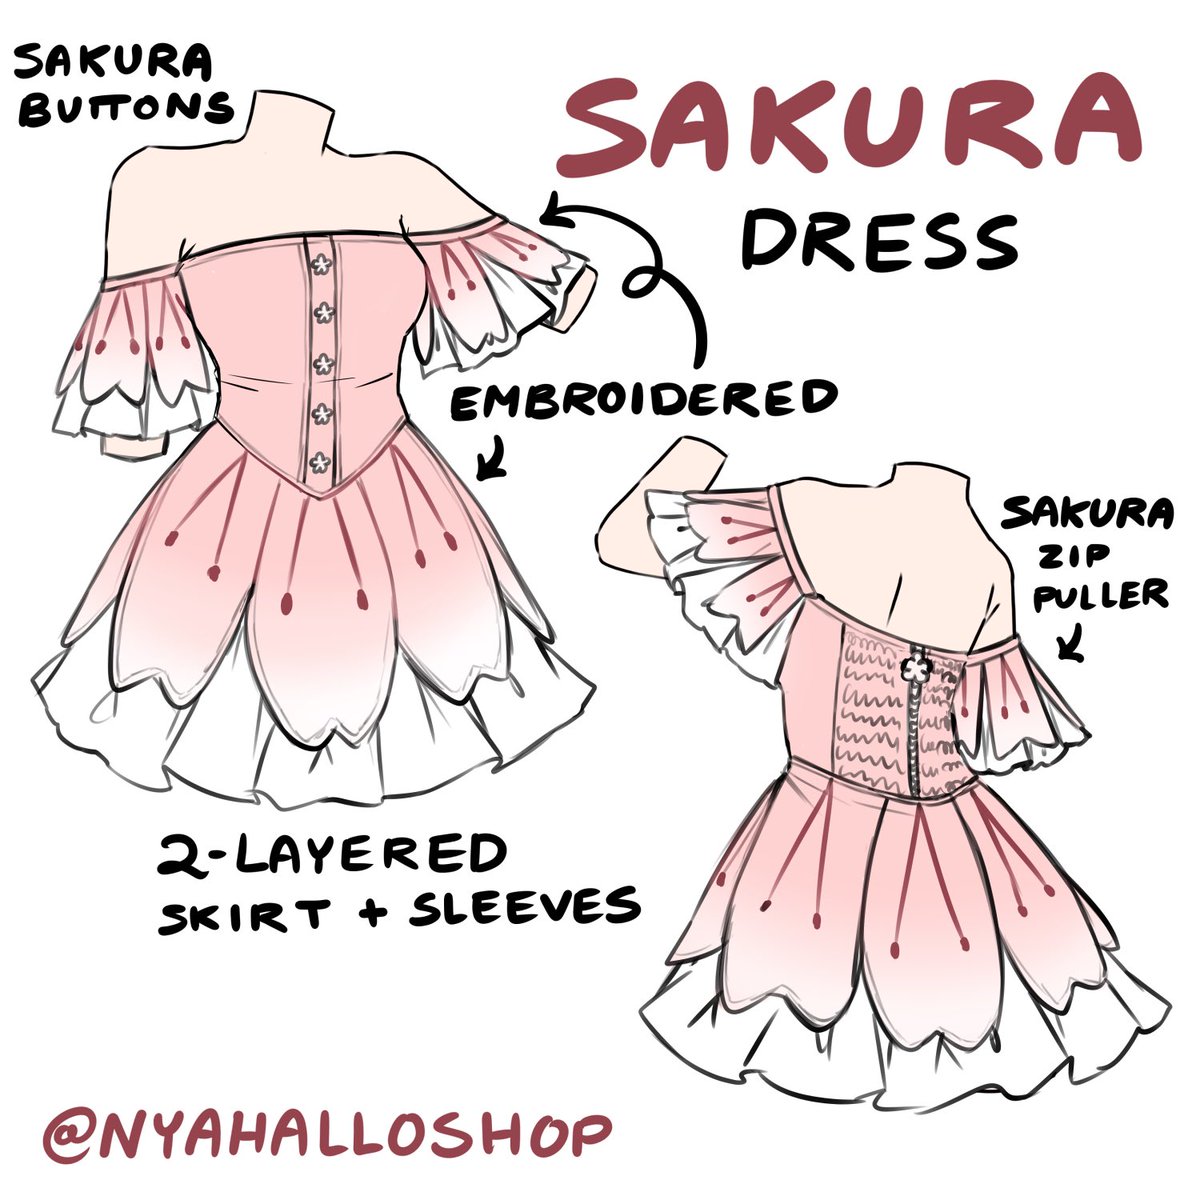 The perfect dress for sakura season 🌸